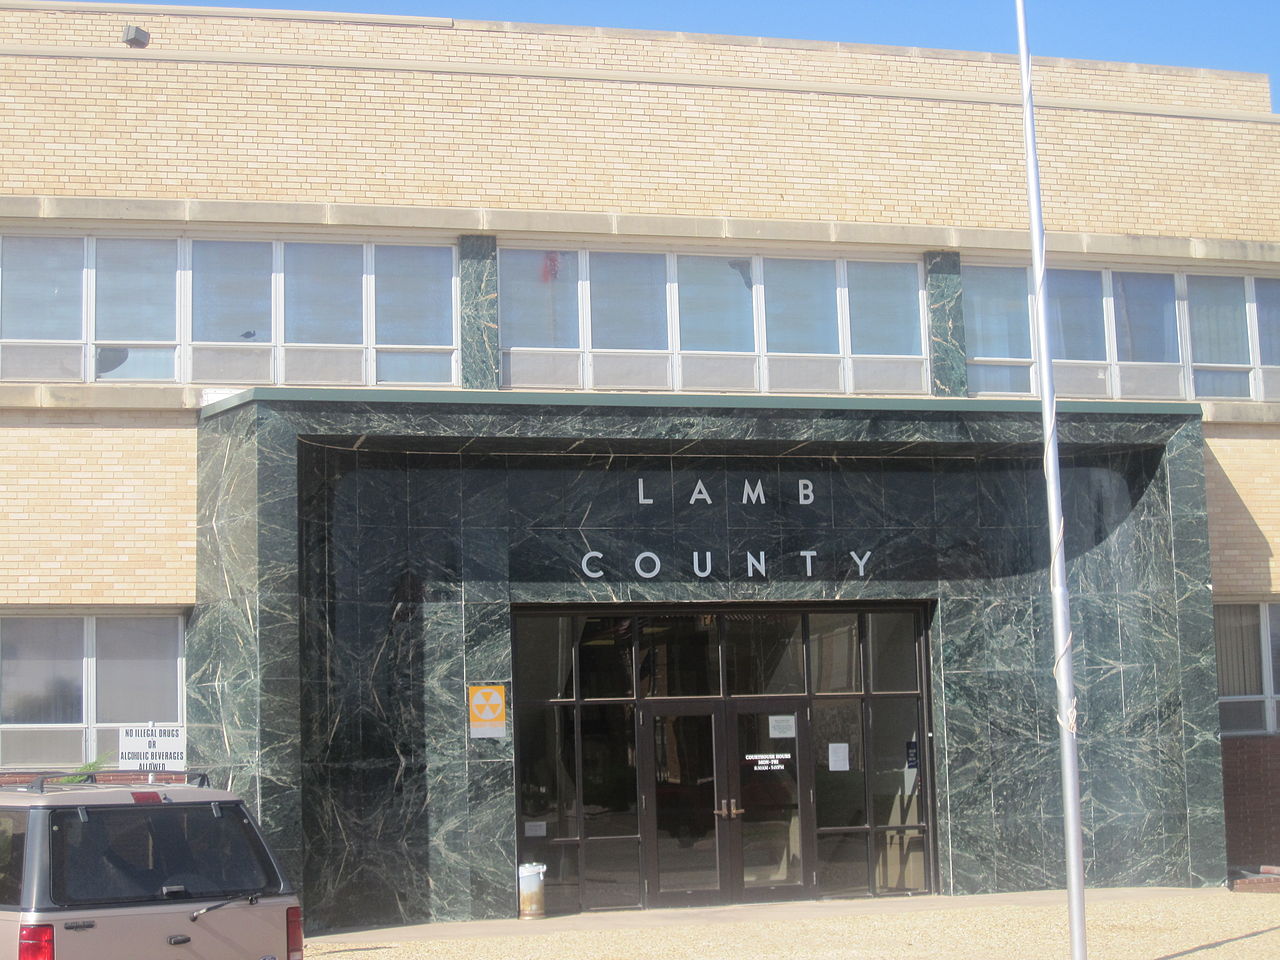 Lamb County